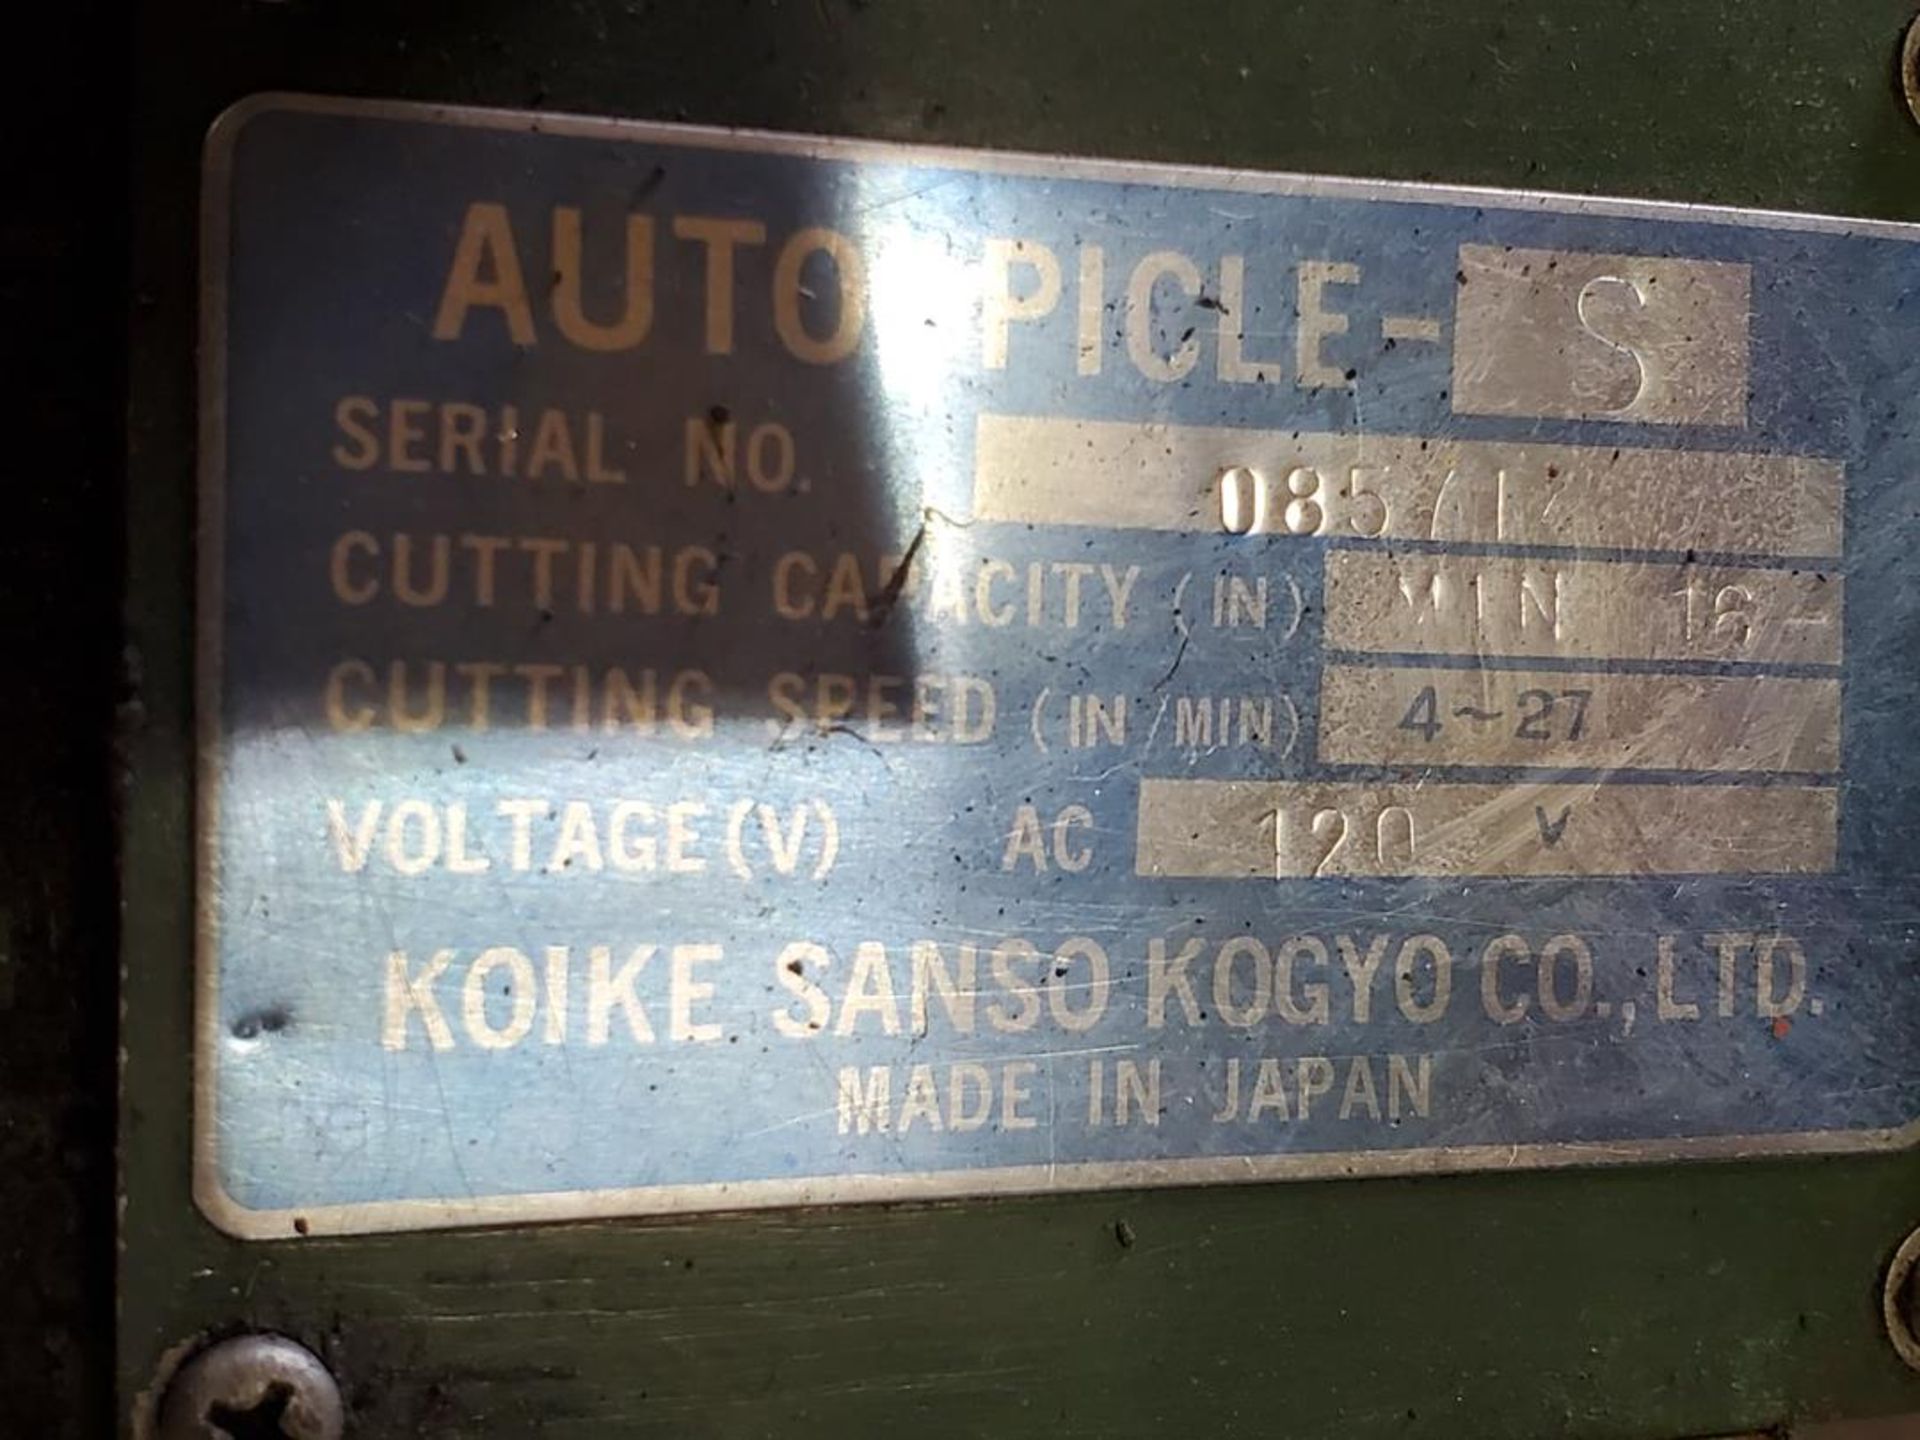 Koike Sanso Kogyo Auto Picle-S Mechanized Portable Pipe Cutting Machine 120V, Cap: Min/16-; W/ - Image 7 of 7